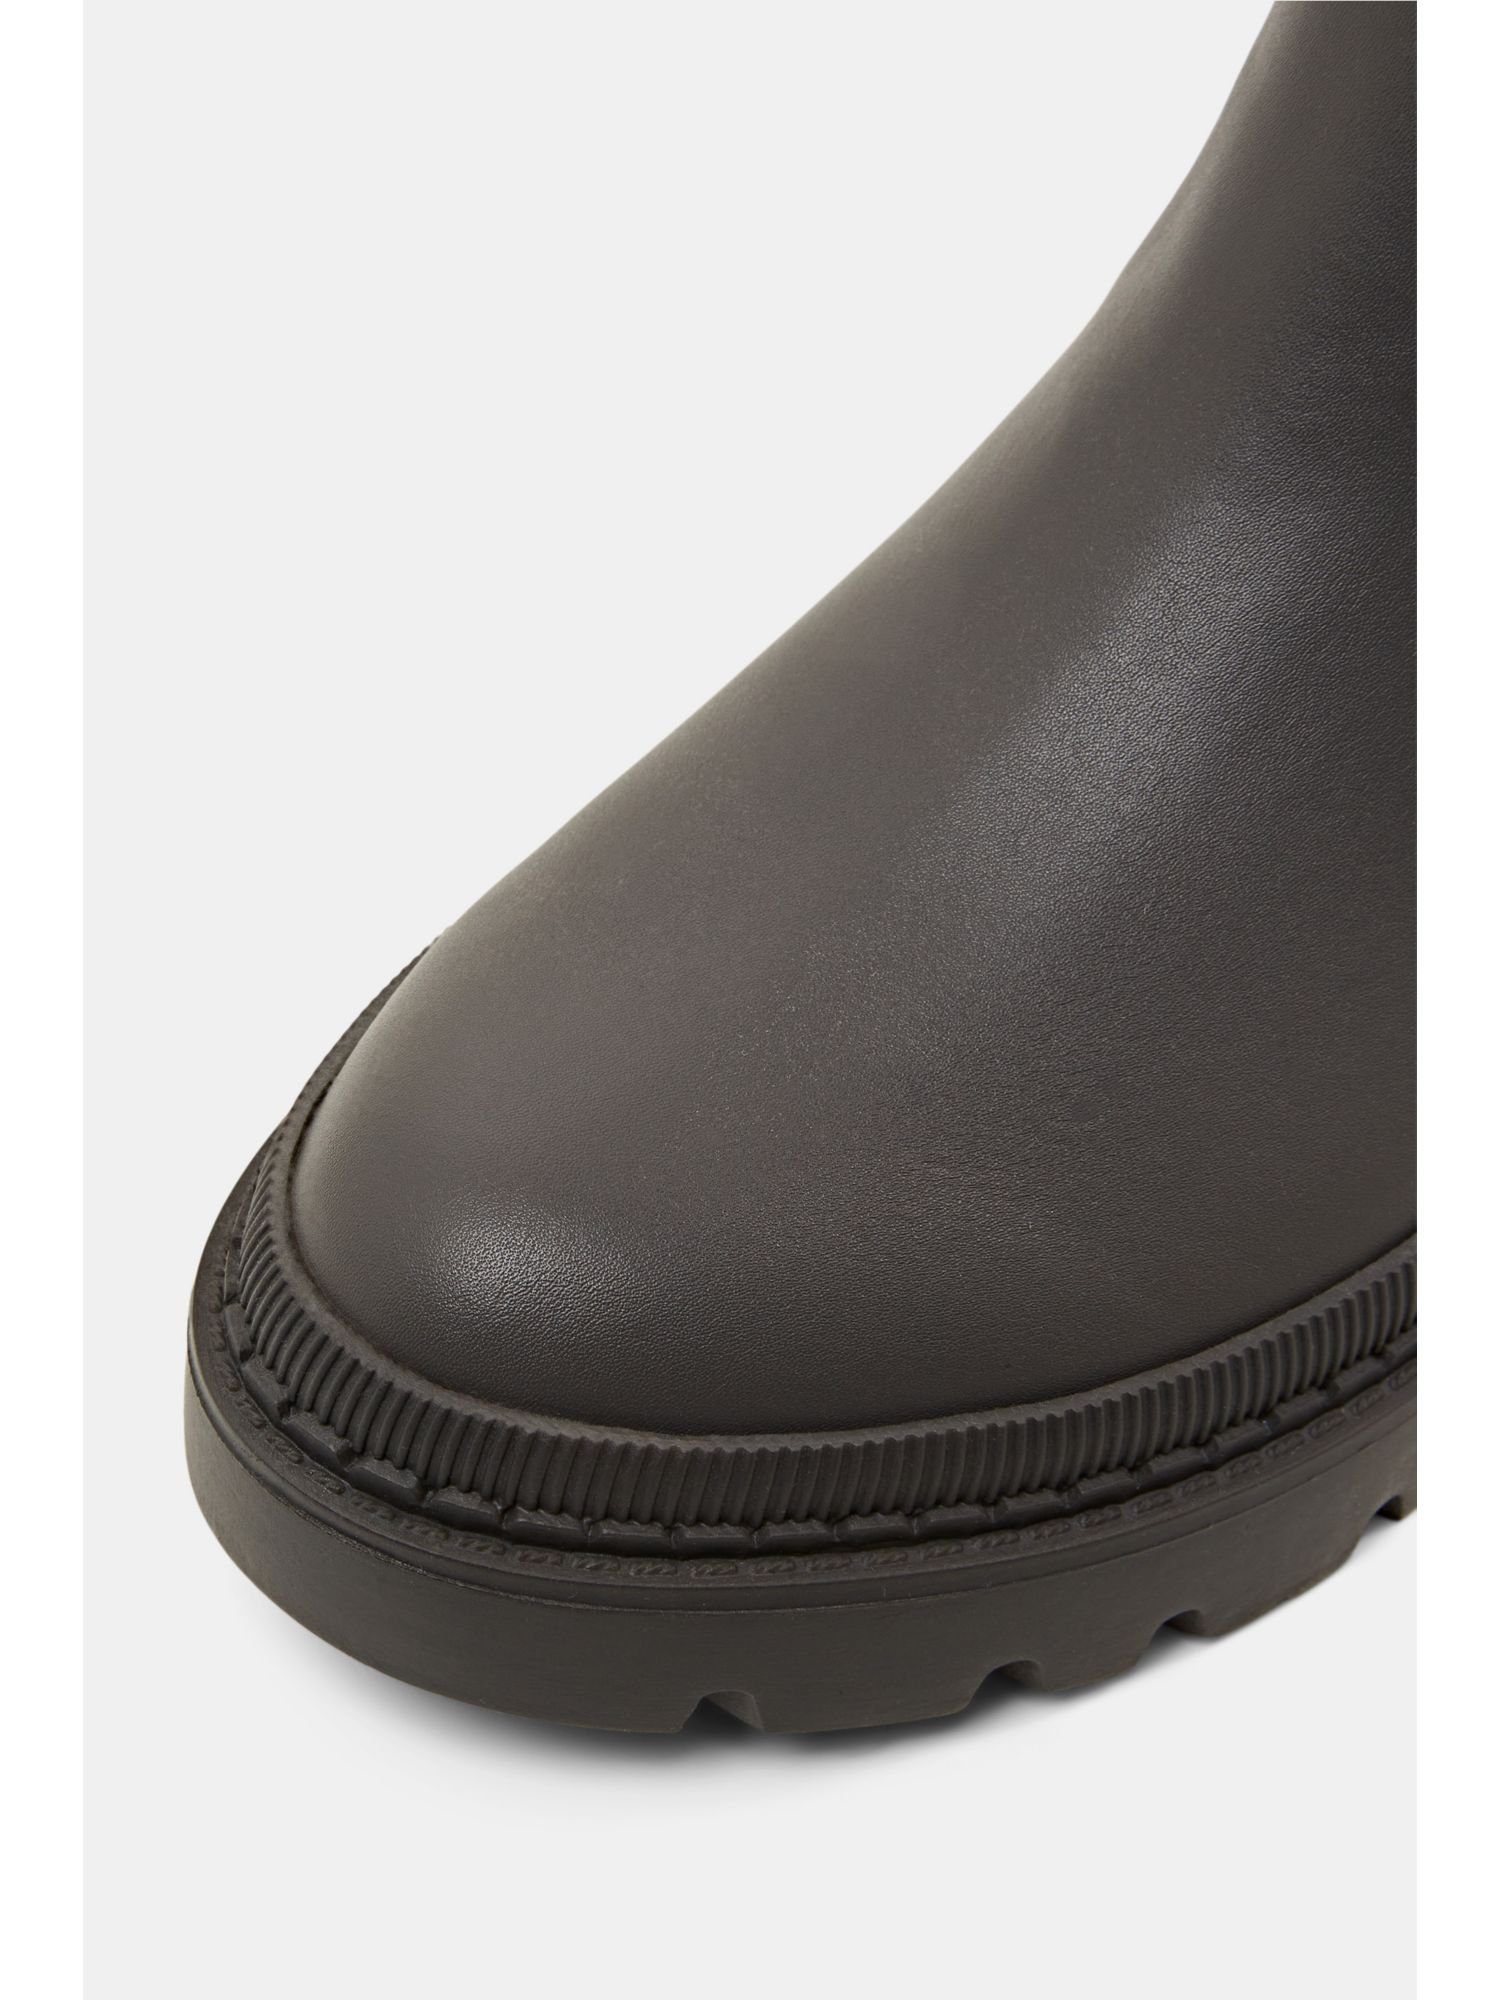 Grobe in Esprit Stiefelette Lederoptik Boots GREY DARK